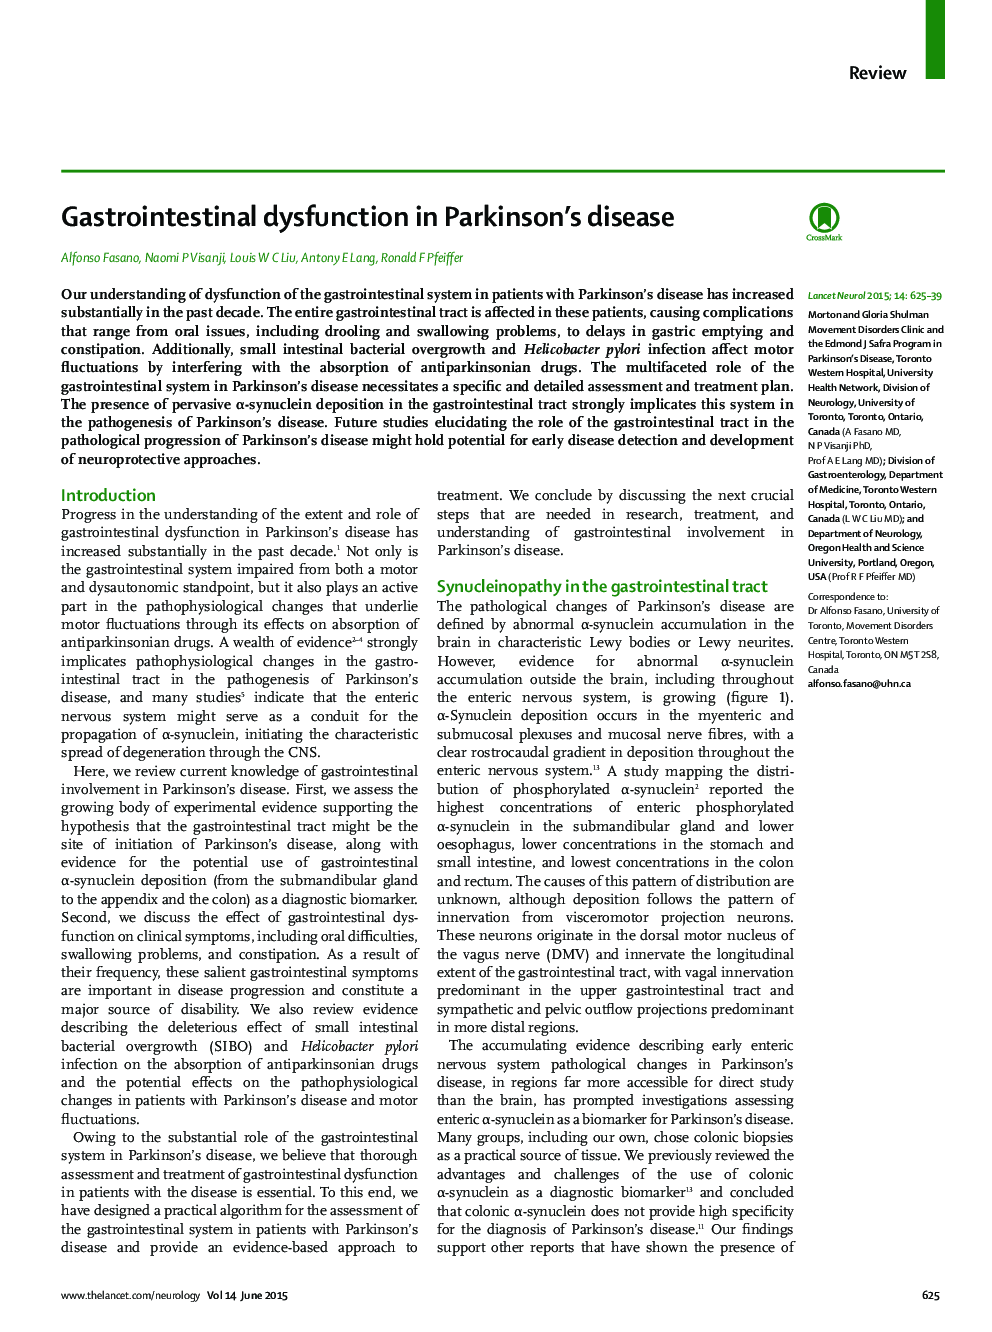 Gastrointestinal dysfunction in Parkinson's disease